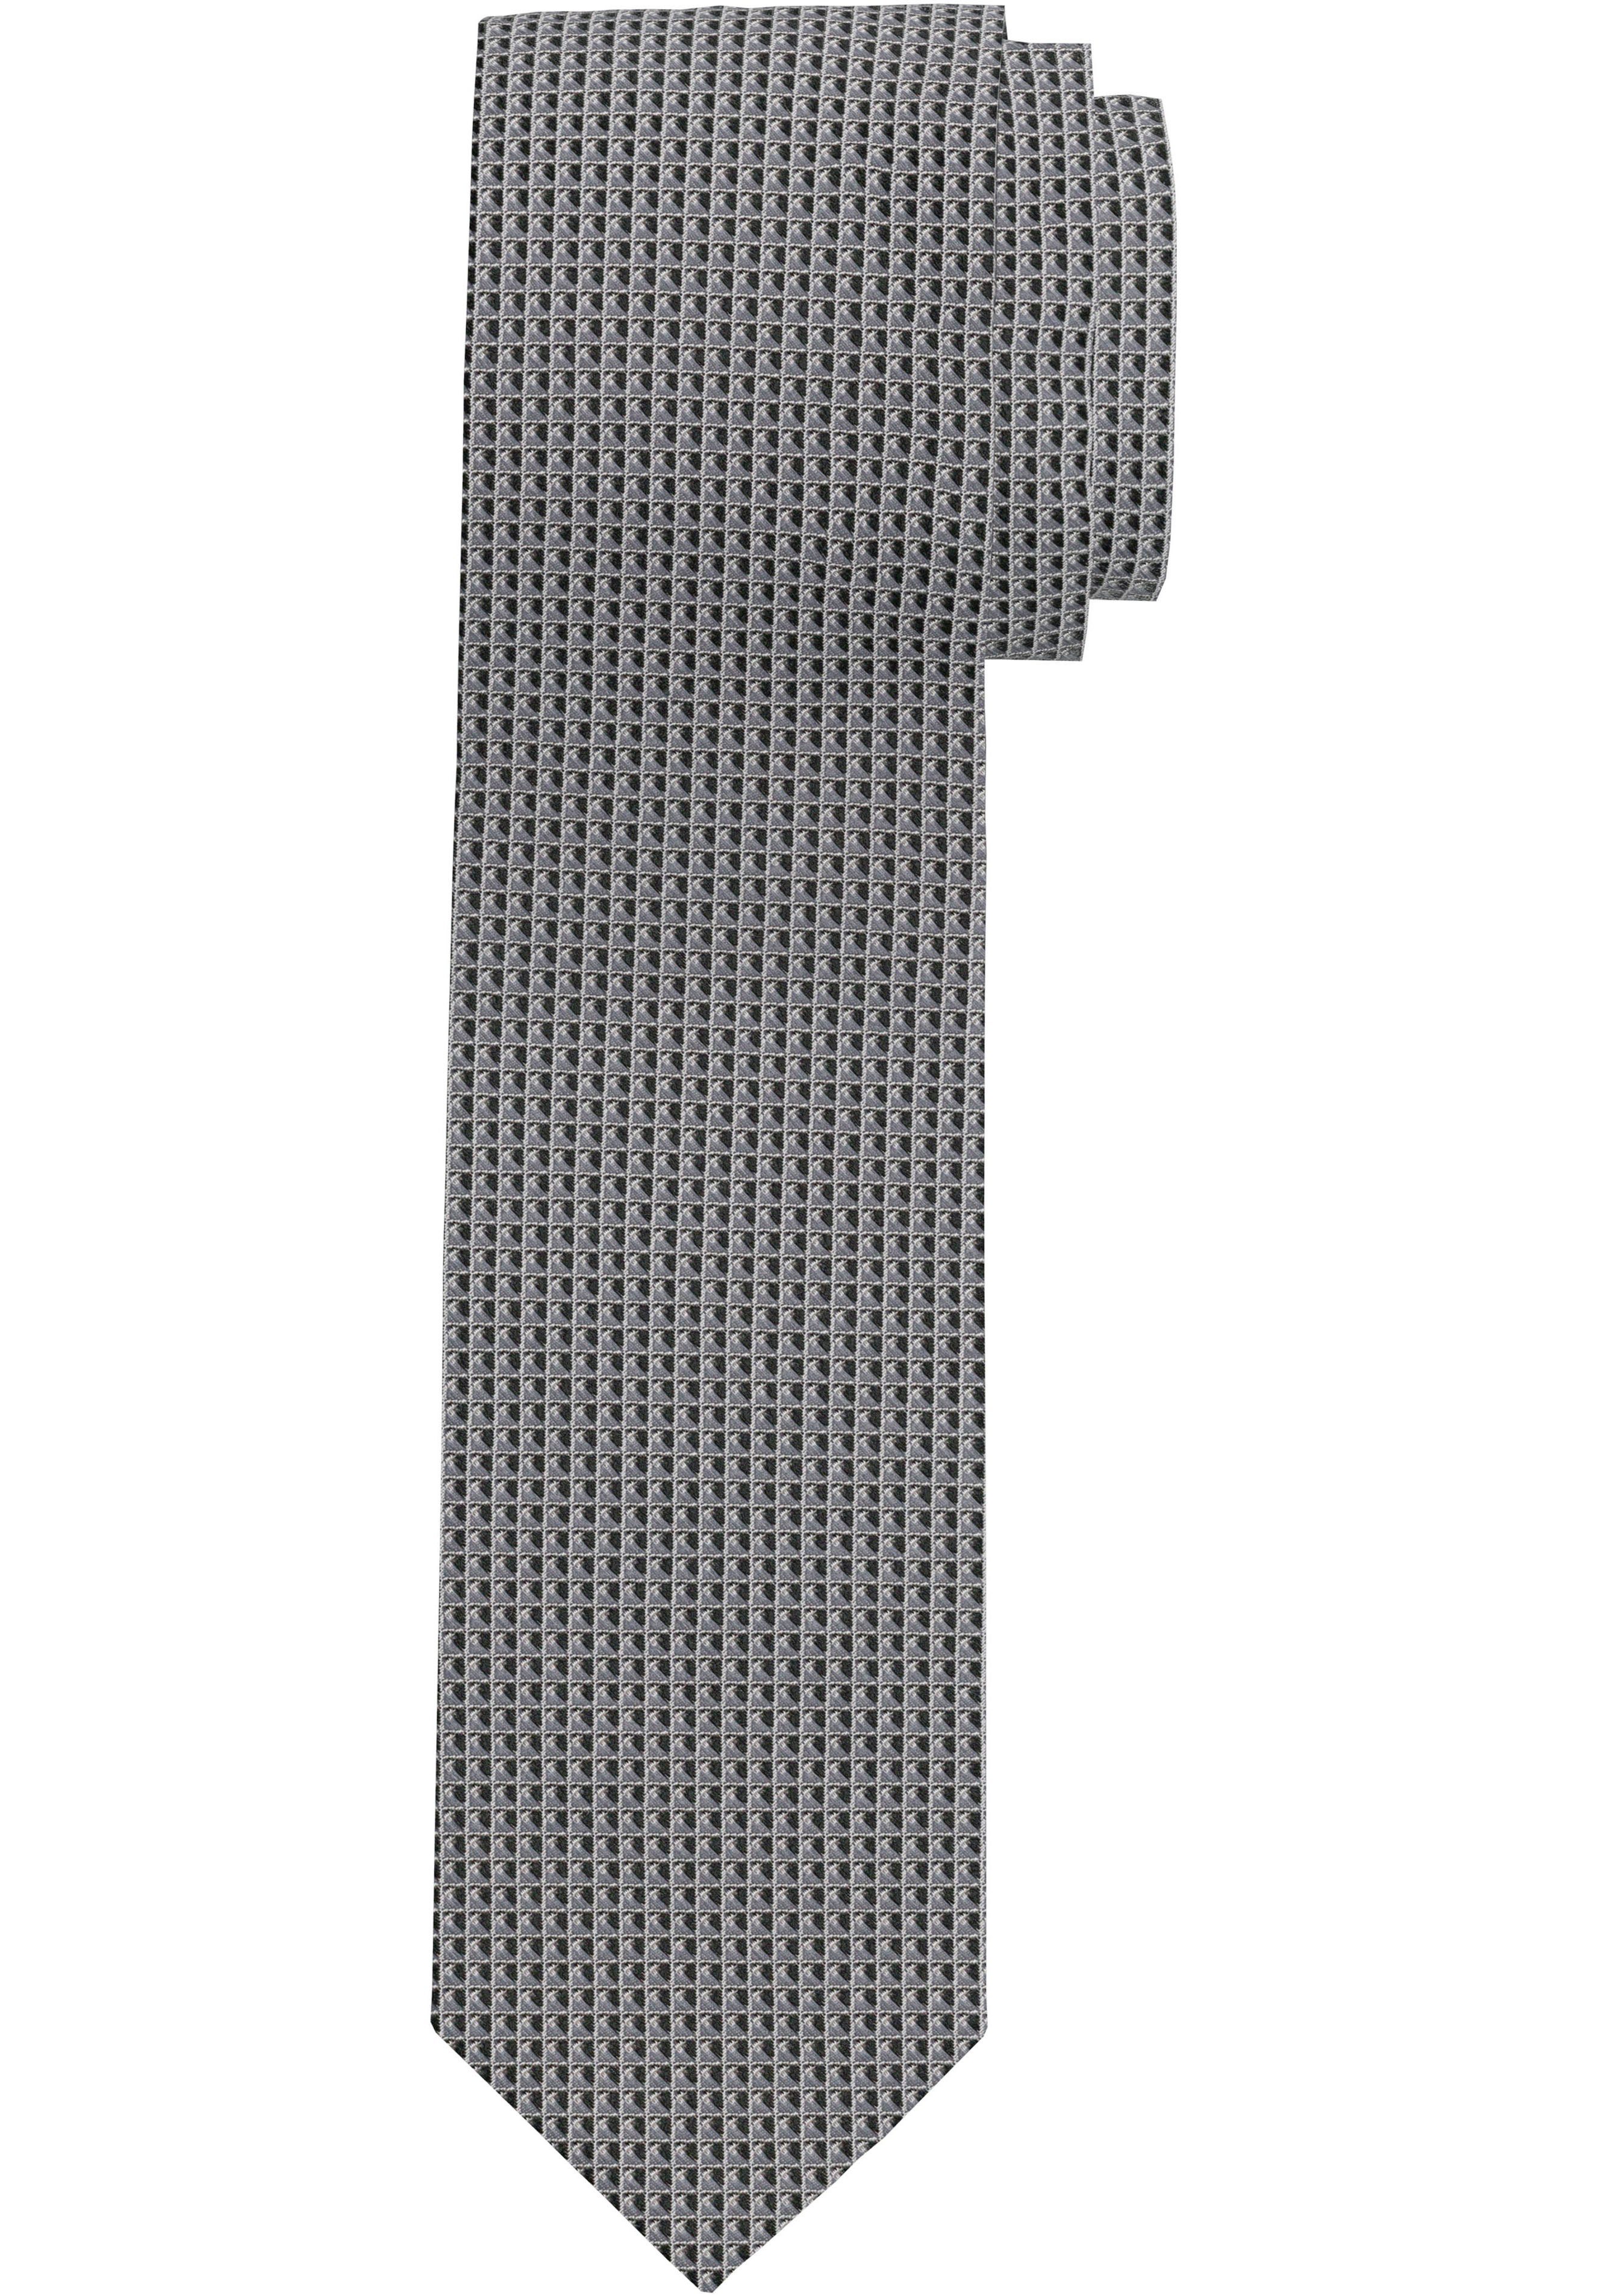 OLYMP Krawatte anthrazit Krawatte Strukturierte